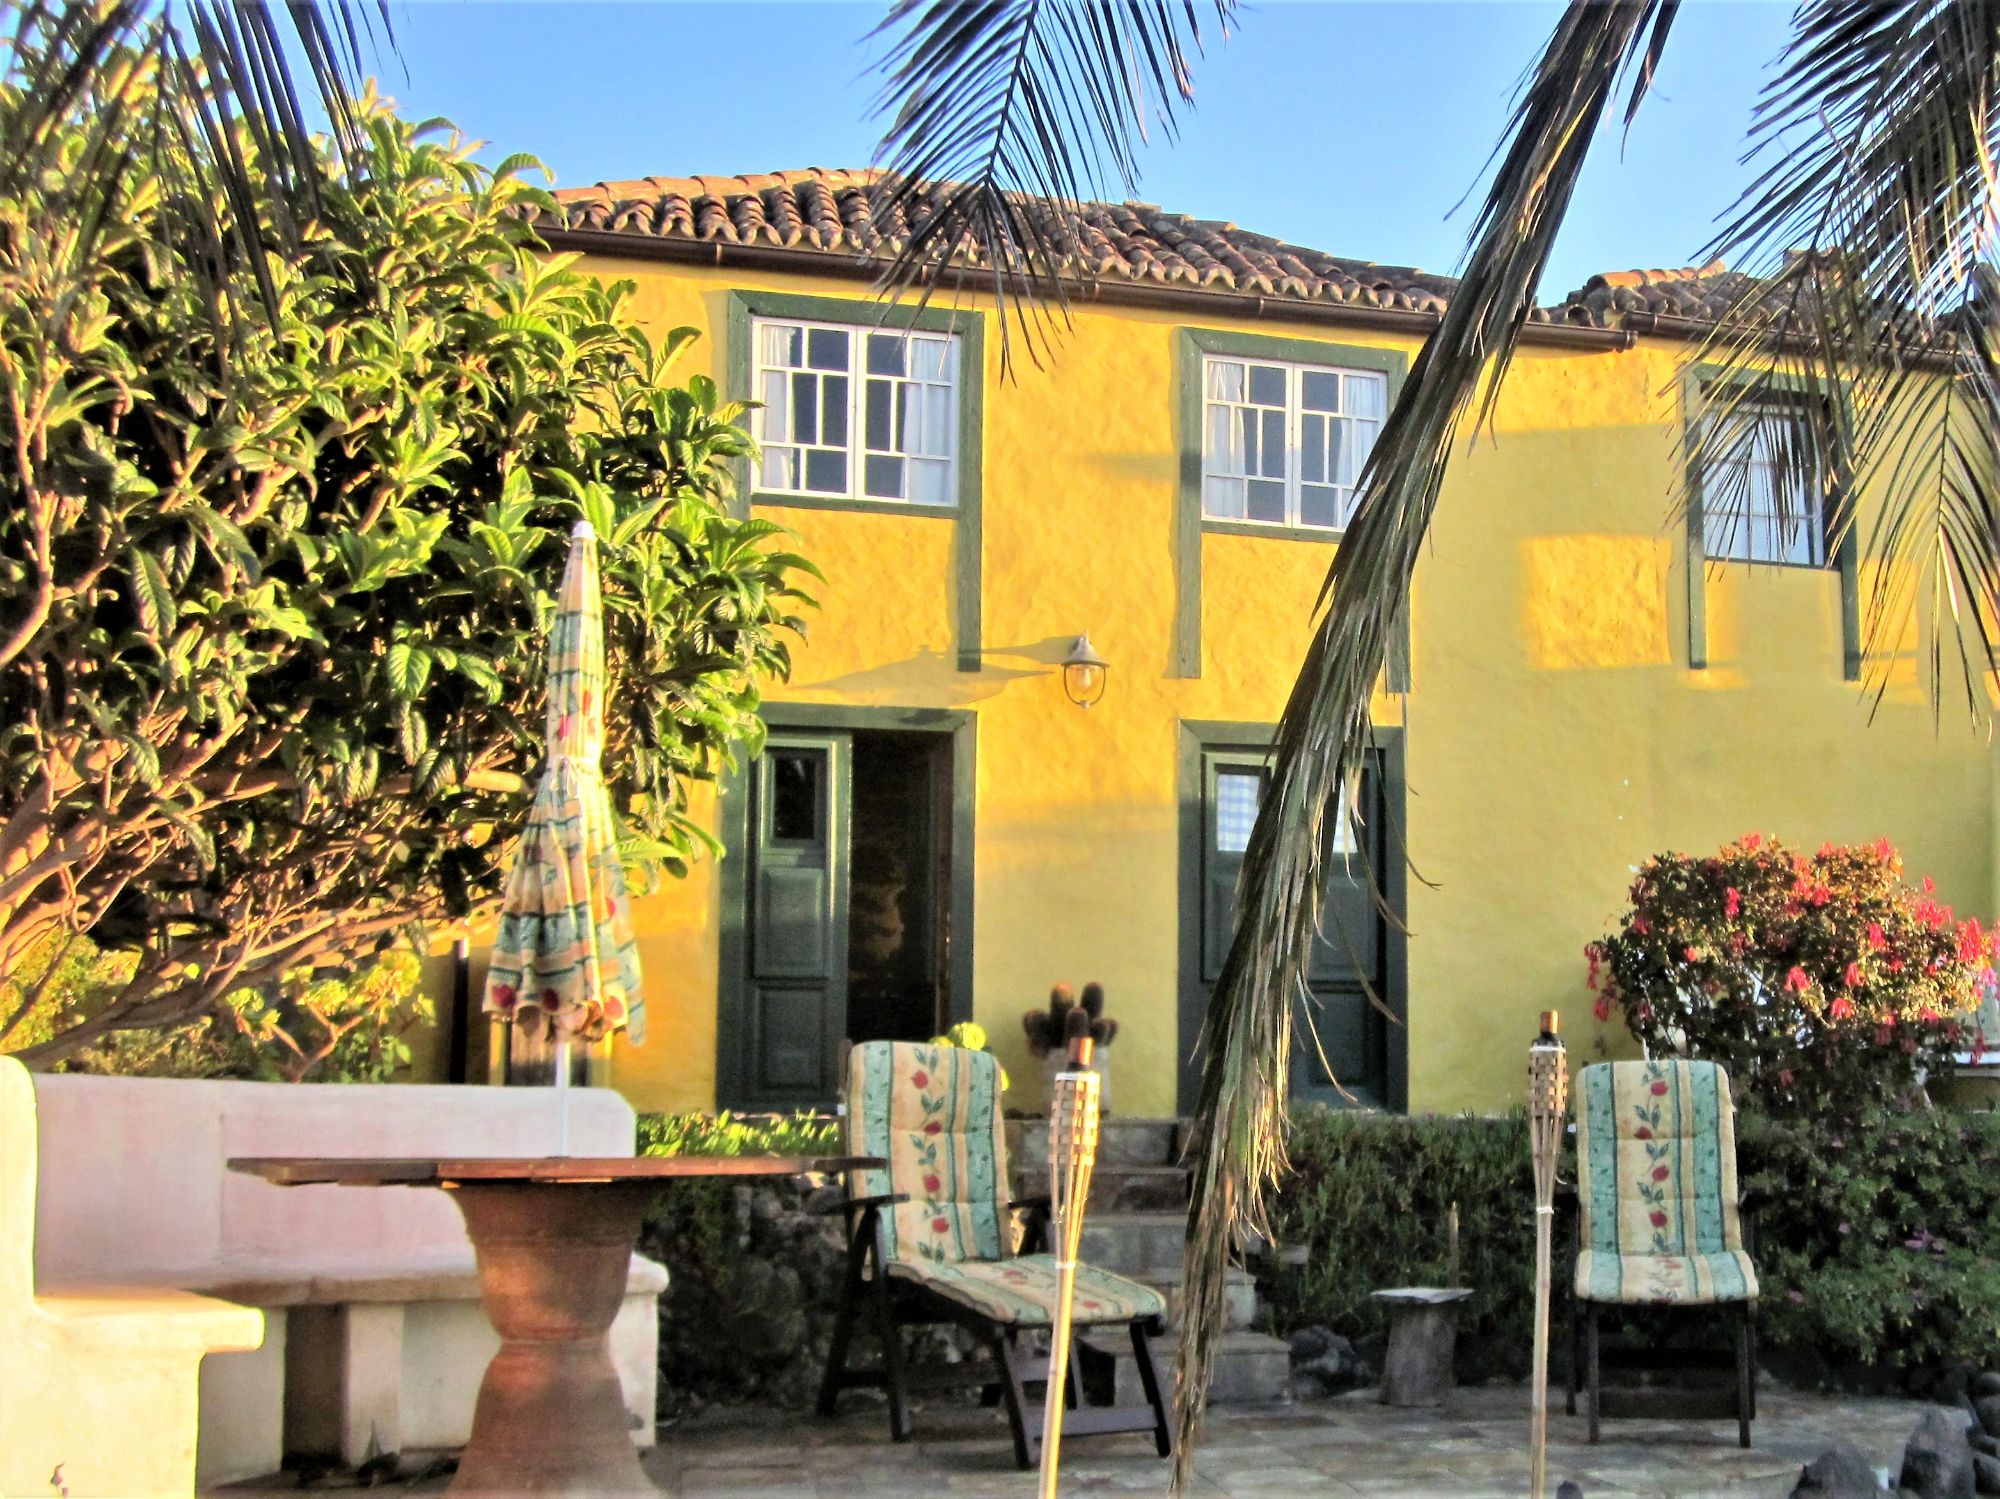 La Casita rural house with sea view, garden, patio near GR130 Camino Real and bus stop